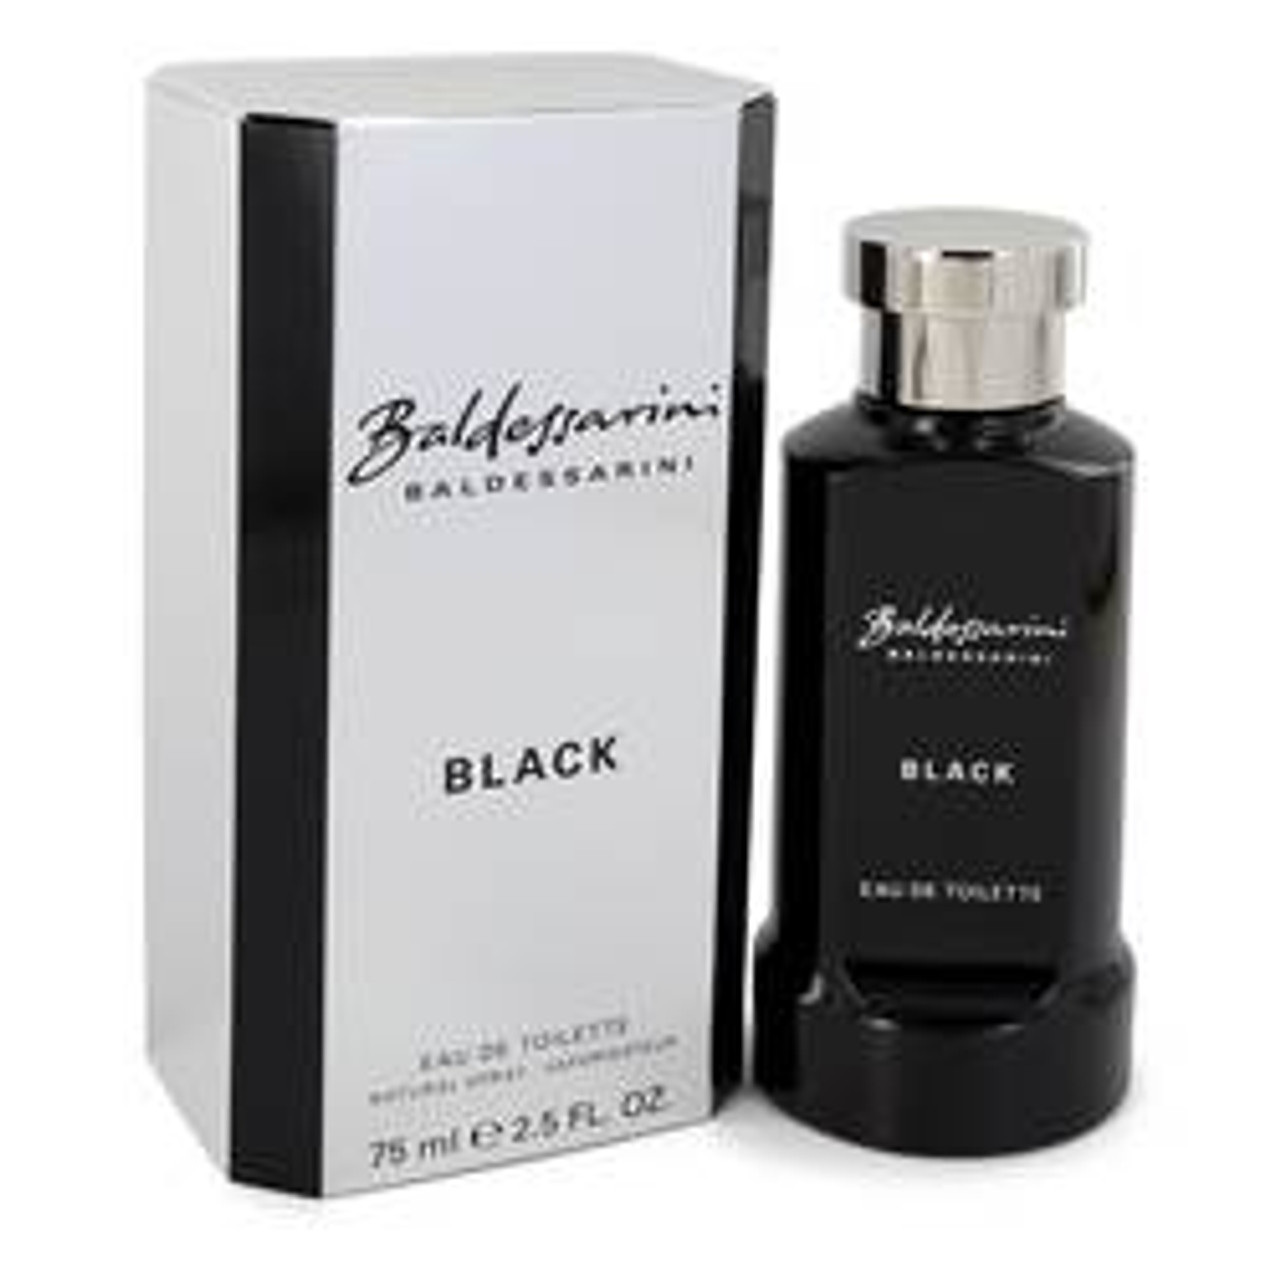 Baldessarini Black Cologne By Baldessarini Eau De Toilette Spray 2.5 oz for Men - [From 63.00 - Choose pk Qty ] - *Ships from Miami